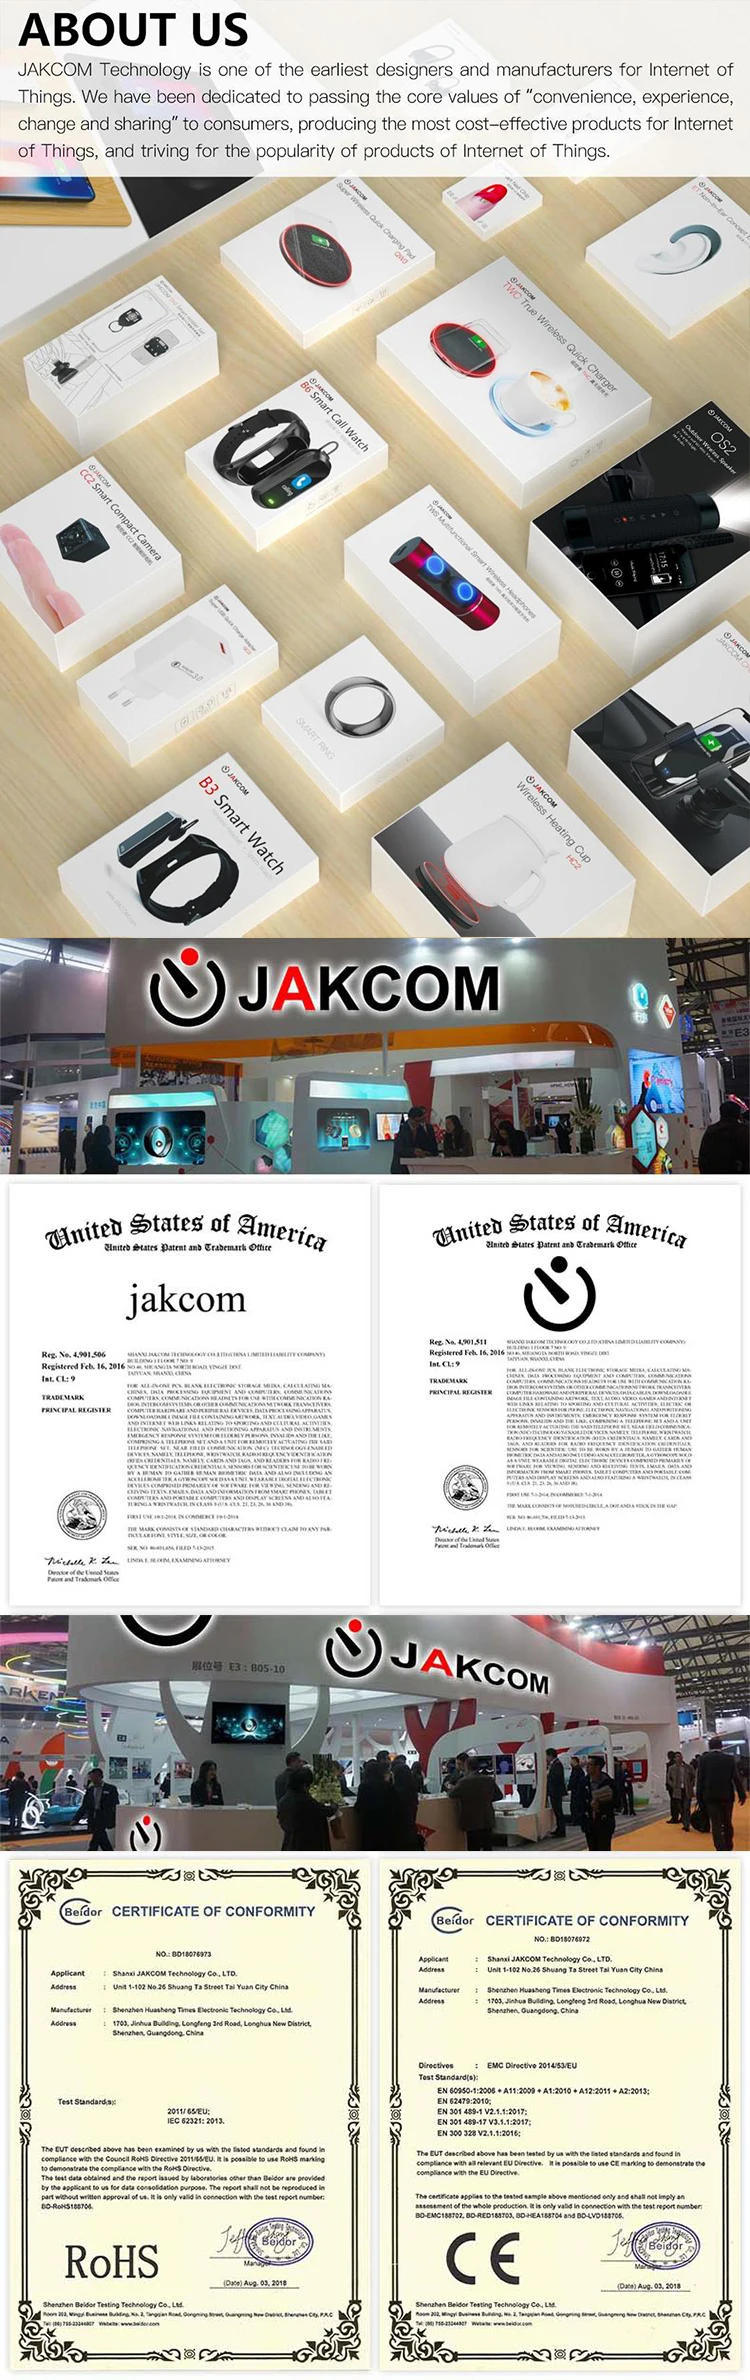 jakcom cd2 rfid replicator new product| Alibaba.com